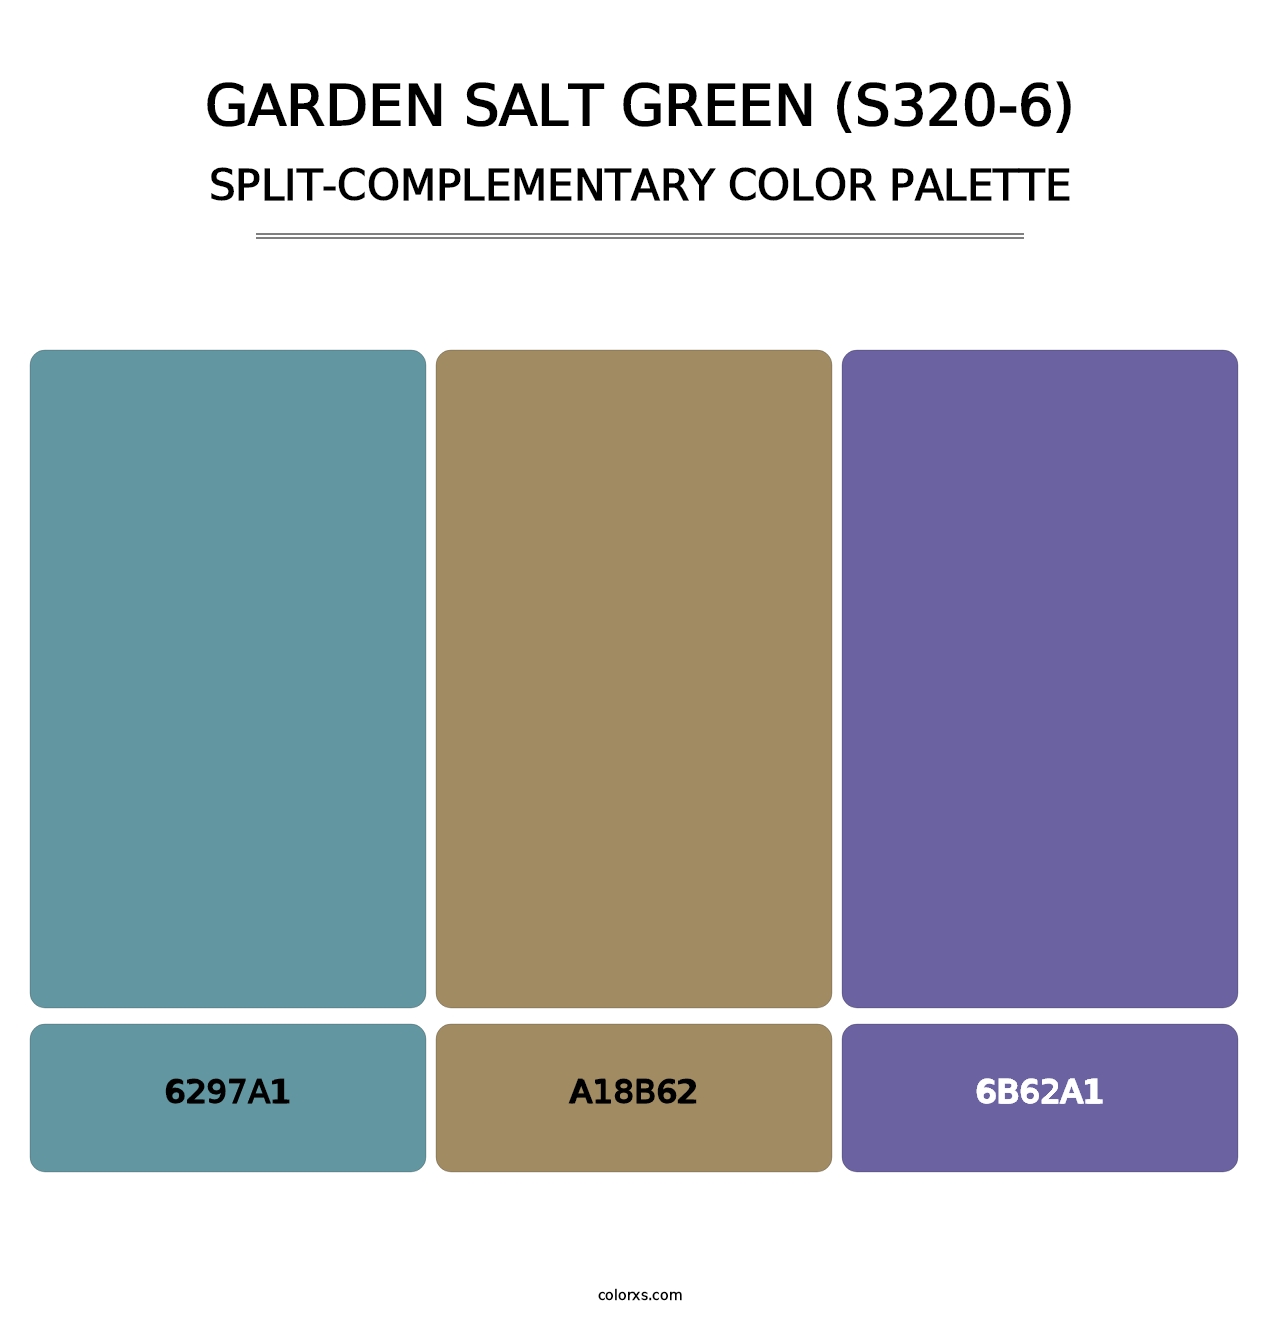 Garden Salt Green (S320-6) - Split-Complementary Color Palette